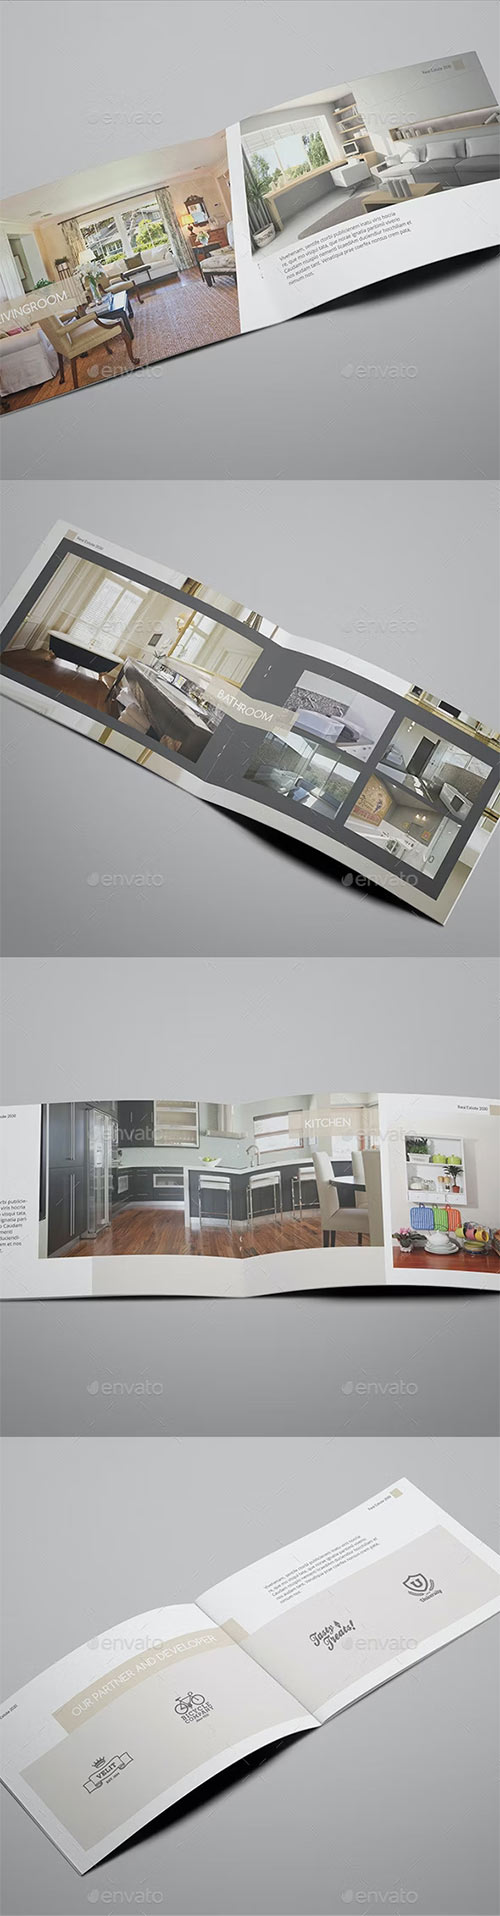 Realto - A5 Real Estate Catalog Brochure 10682433